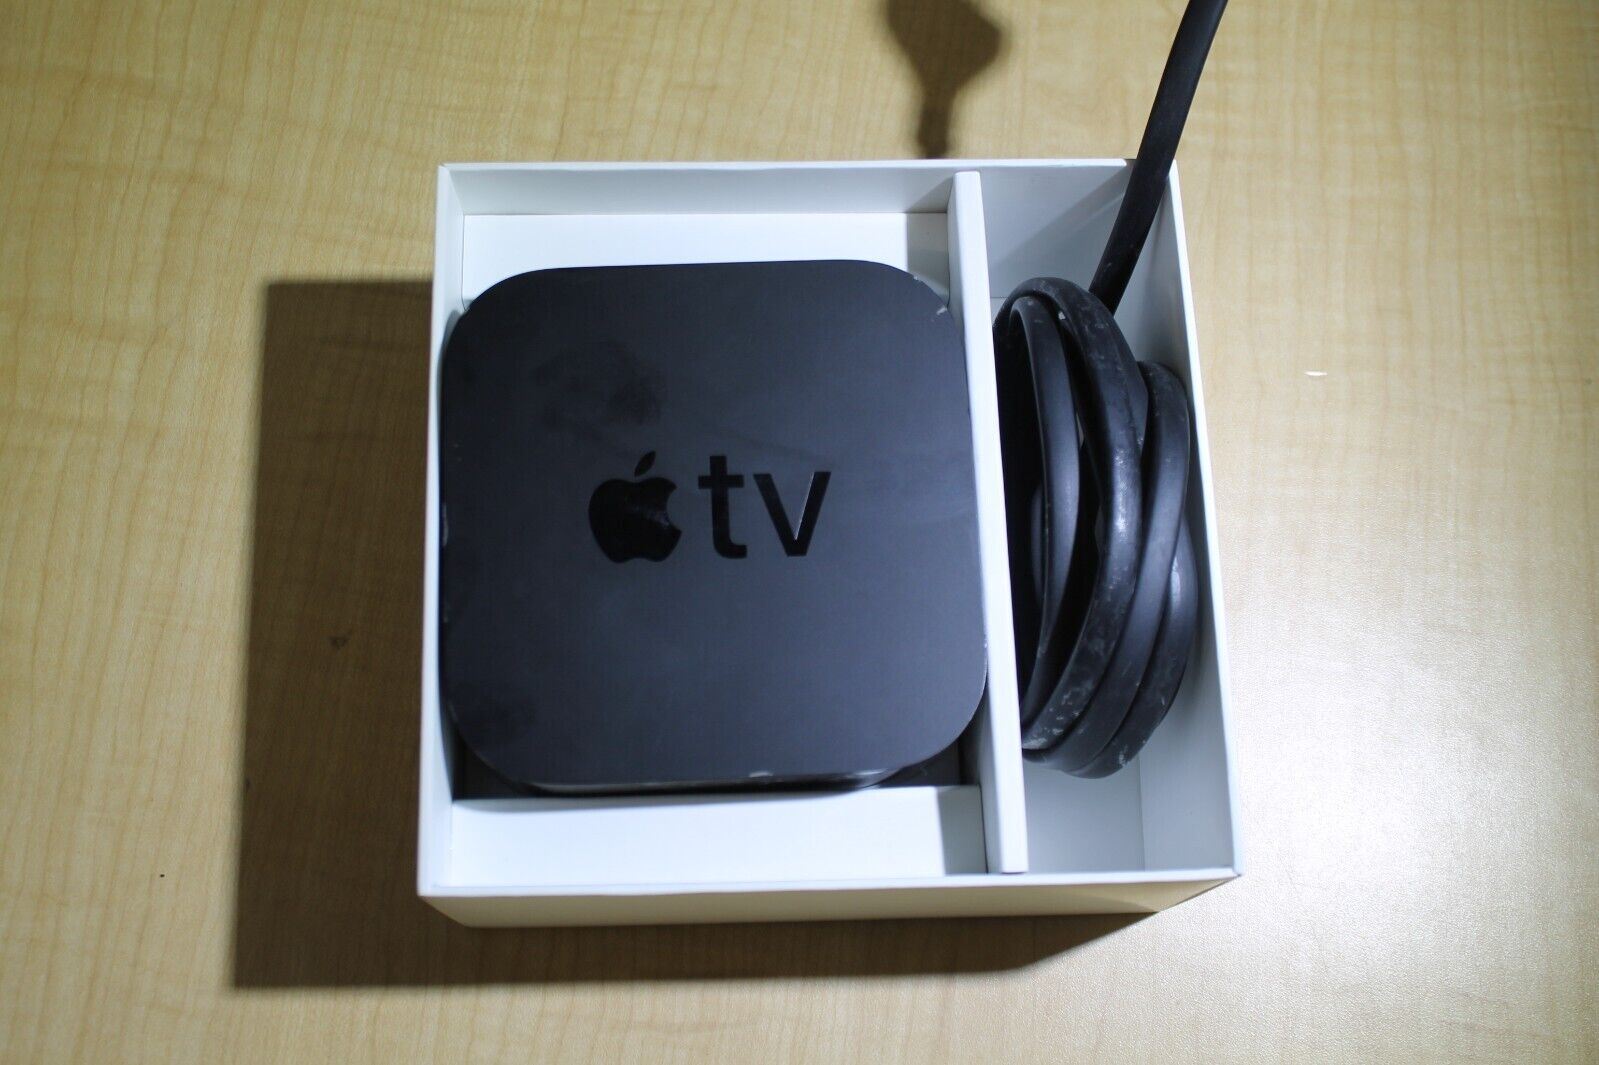 Apple TV 4K HDR 32GB A1842 w/ Remote & Box (used) | eBay